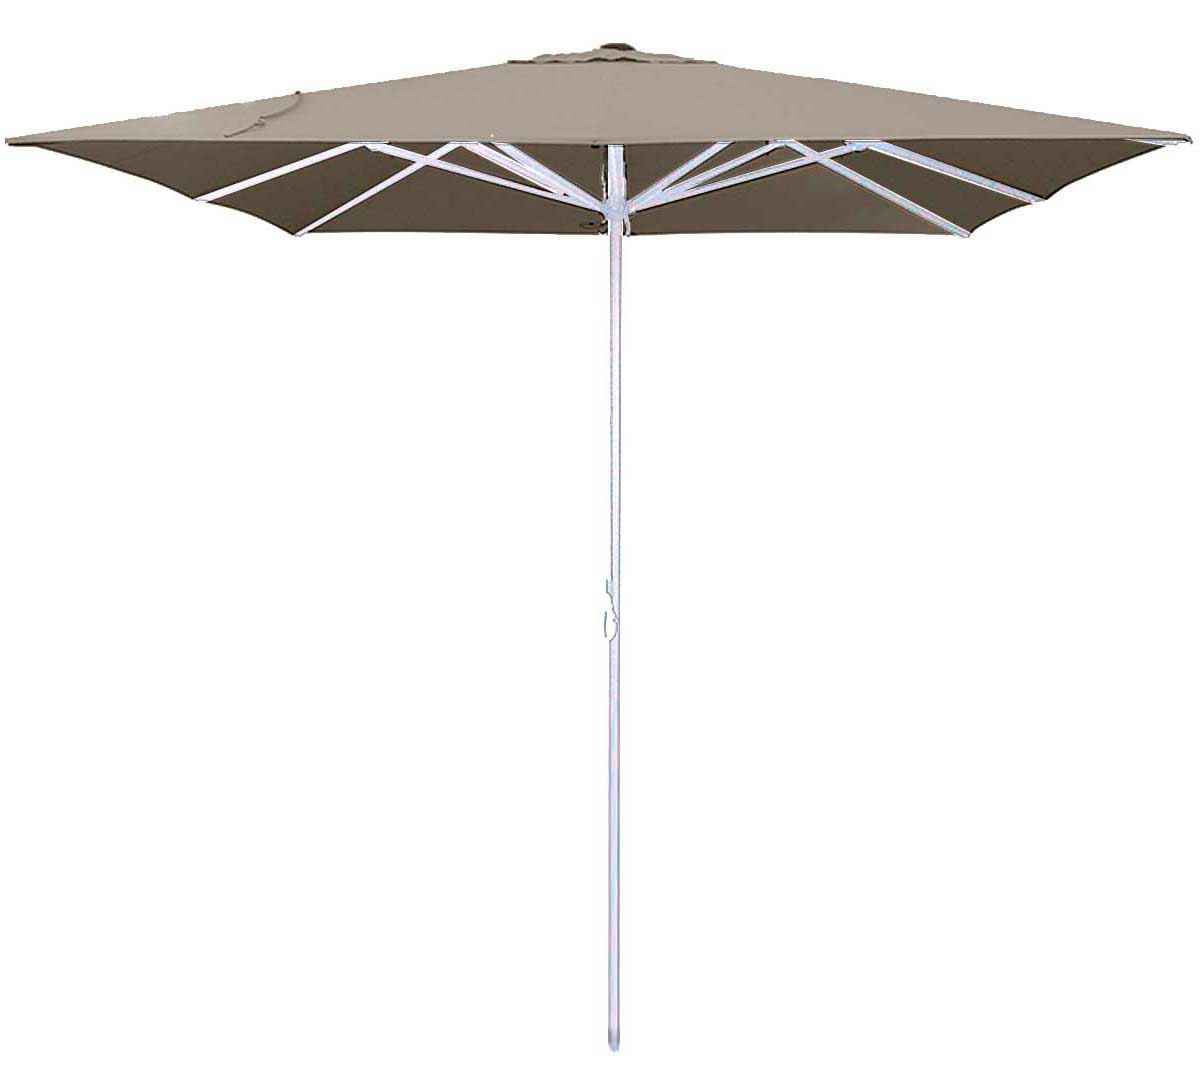 conva-parasol-heavy-duty-3×2-acrilico-b-taupe-01